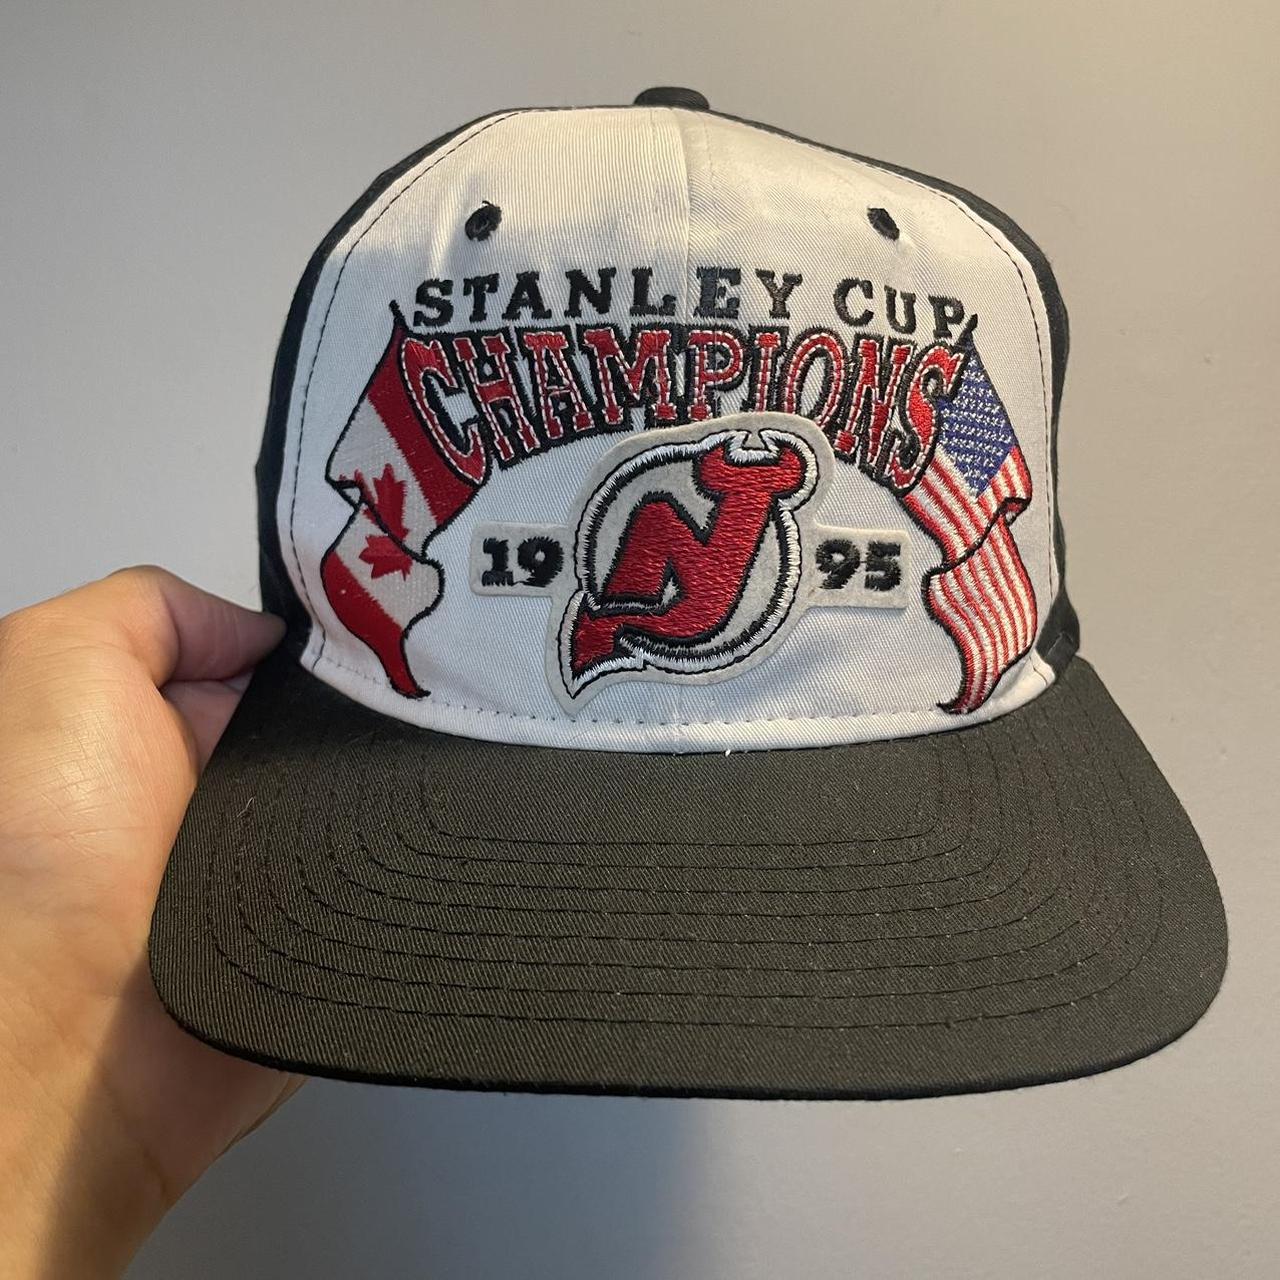 NHL Retro New Jersey Devils Snapback Hat - Hats - London, Ontario